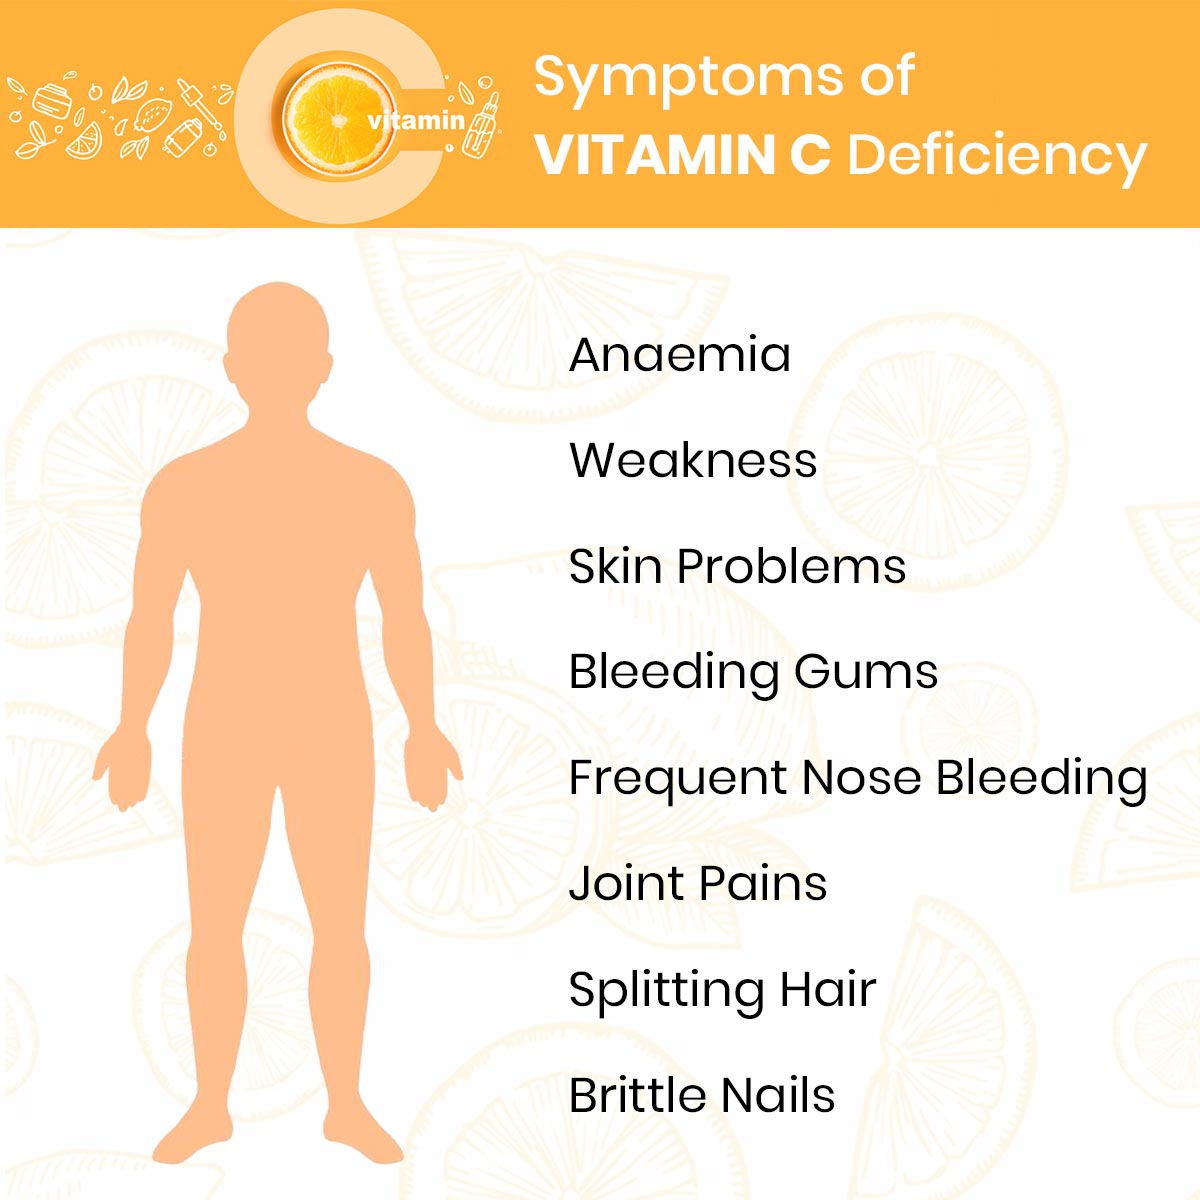 Symptoms-of-vitamin-c-deficiency